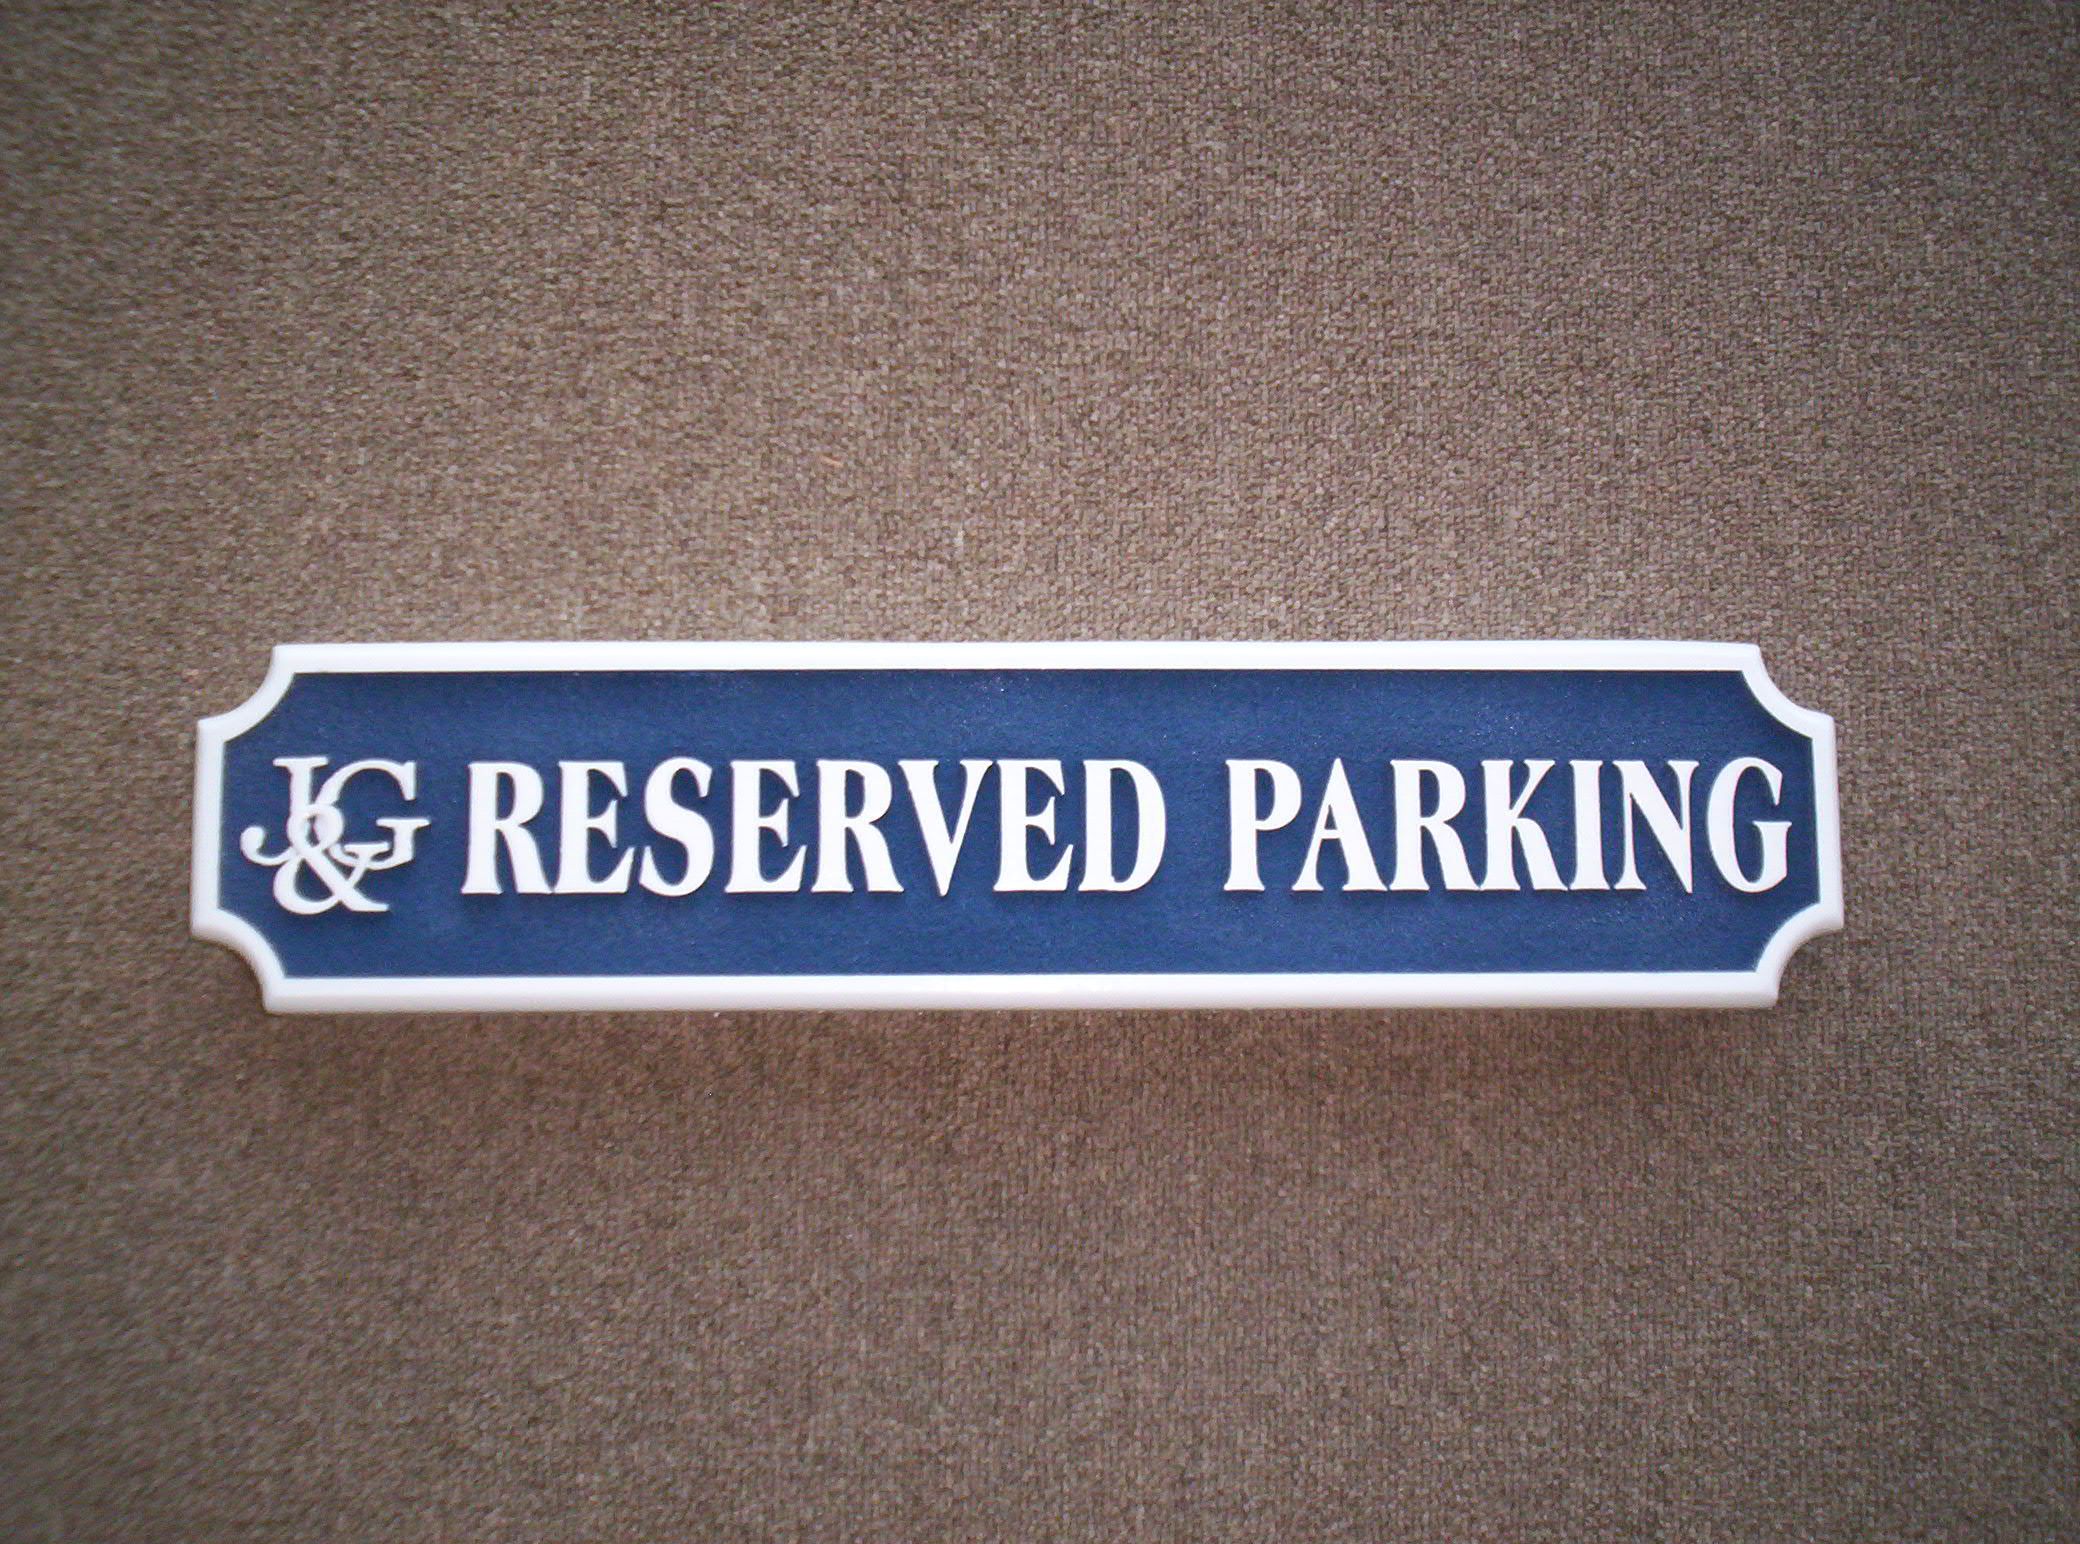 H17325 -  Carved and Sandblasted Wood Grain HDU  "Reserved Parking" Sign